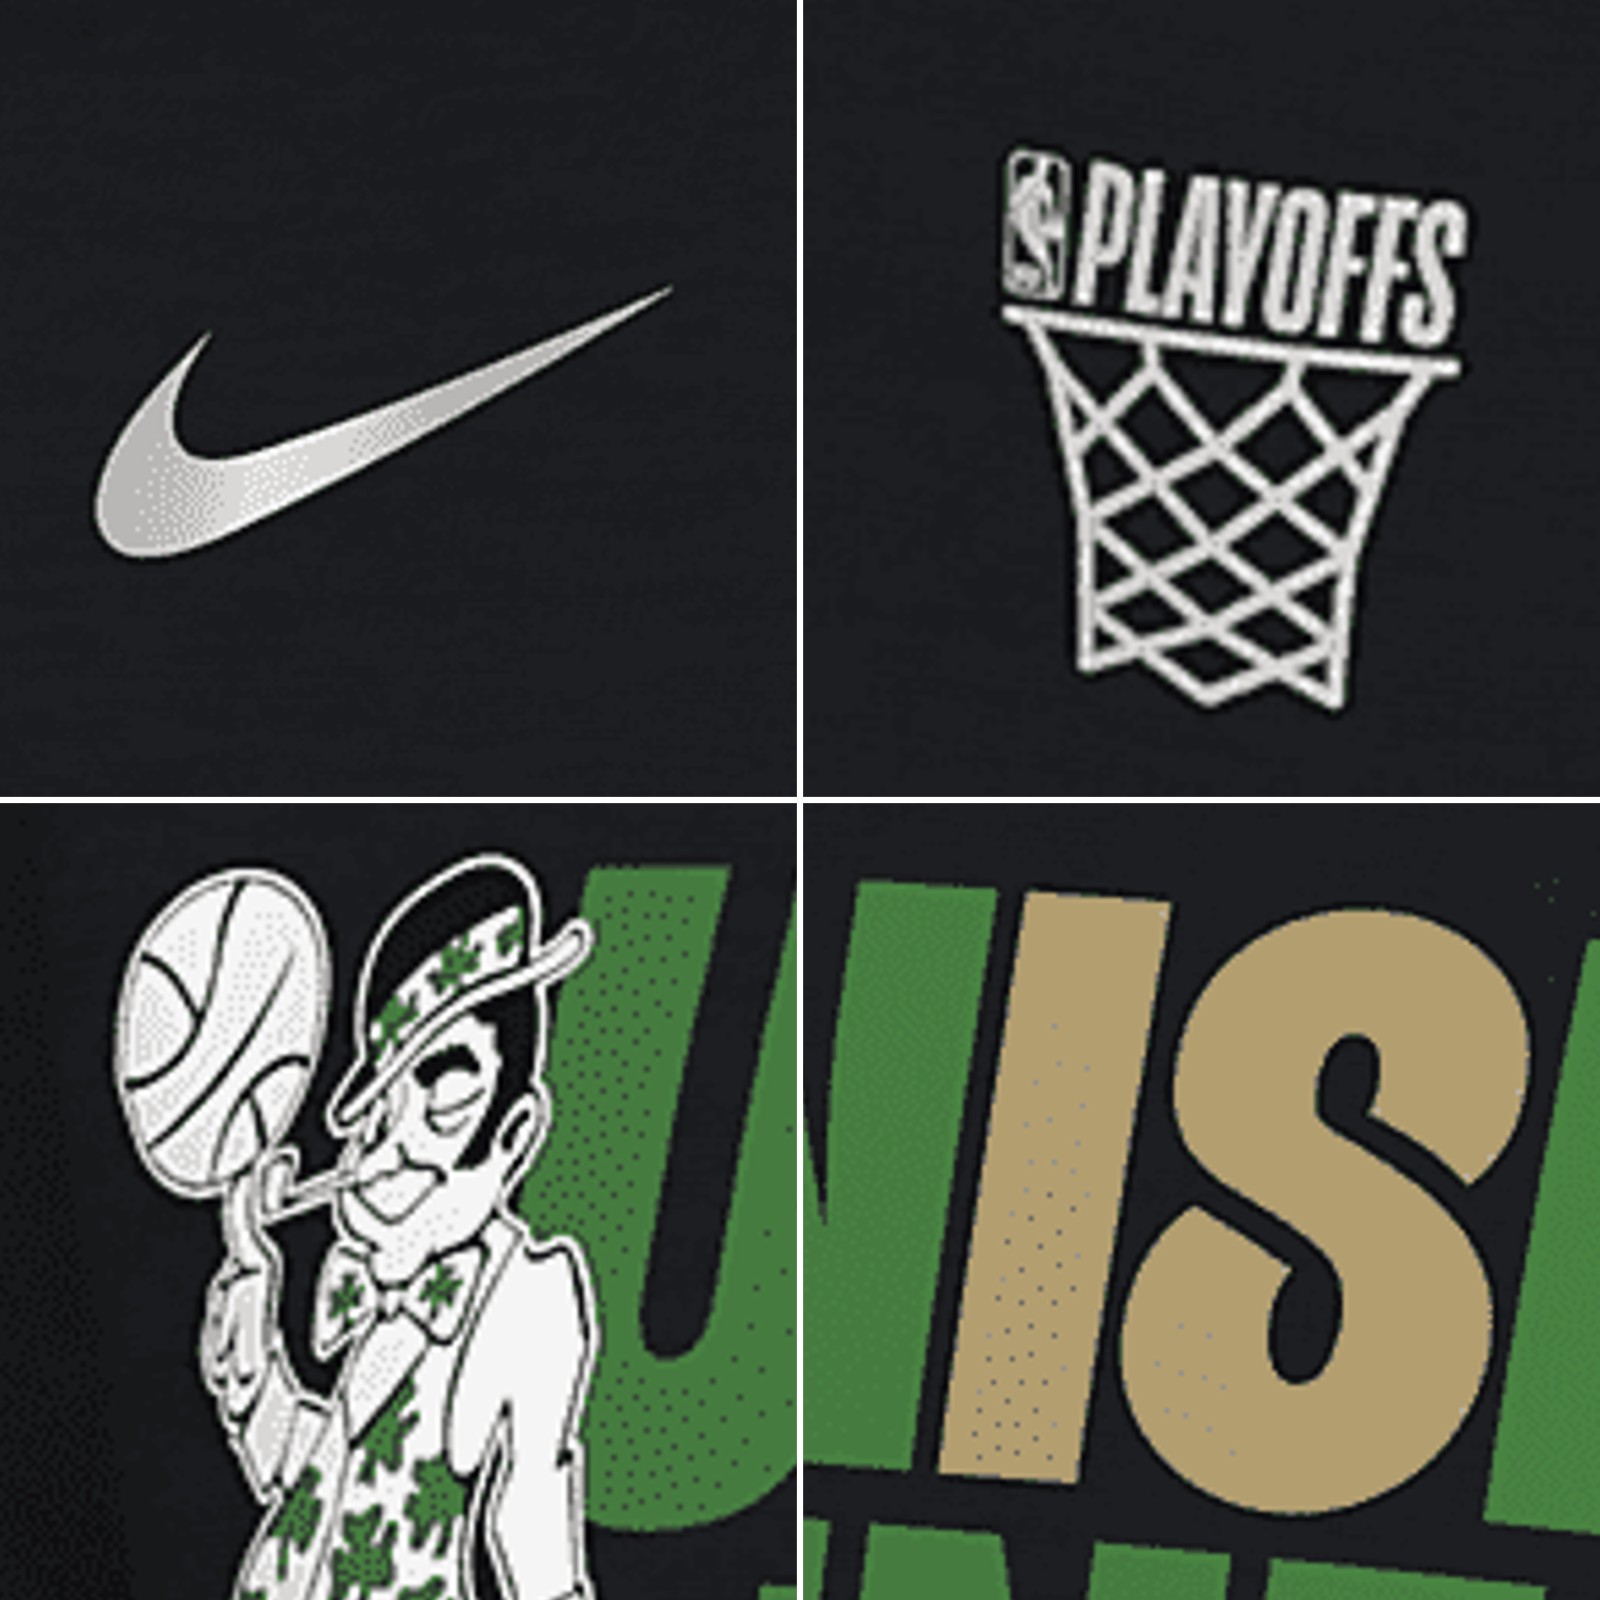 NBA Store Boston Celtics Unfinished Business T-Shirt, Nike Adult Boston  Celtics Unfinished Business Shirt - Printiment